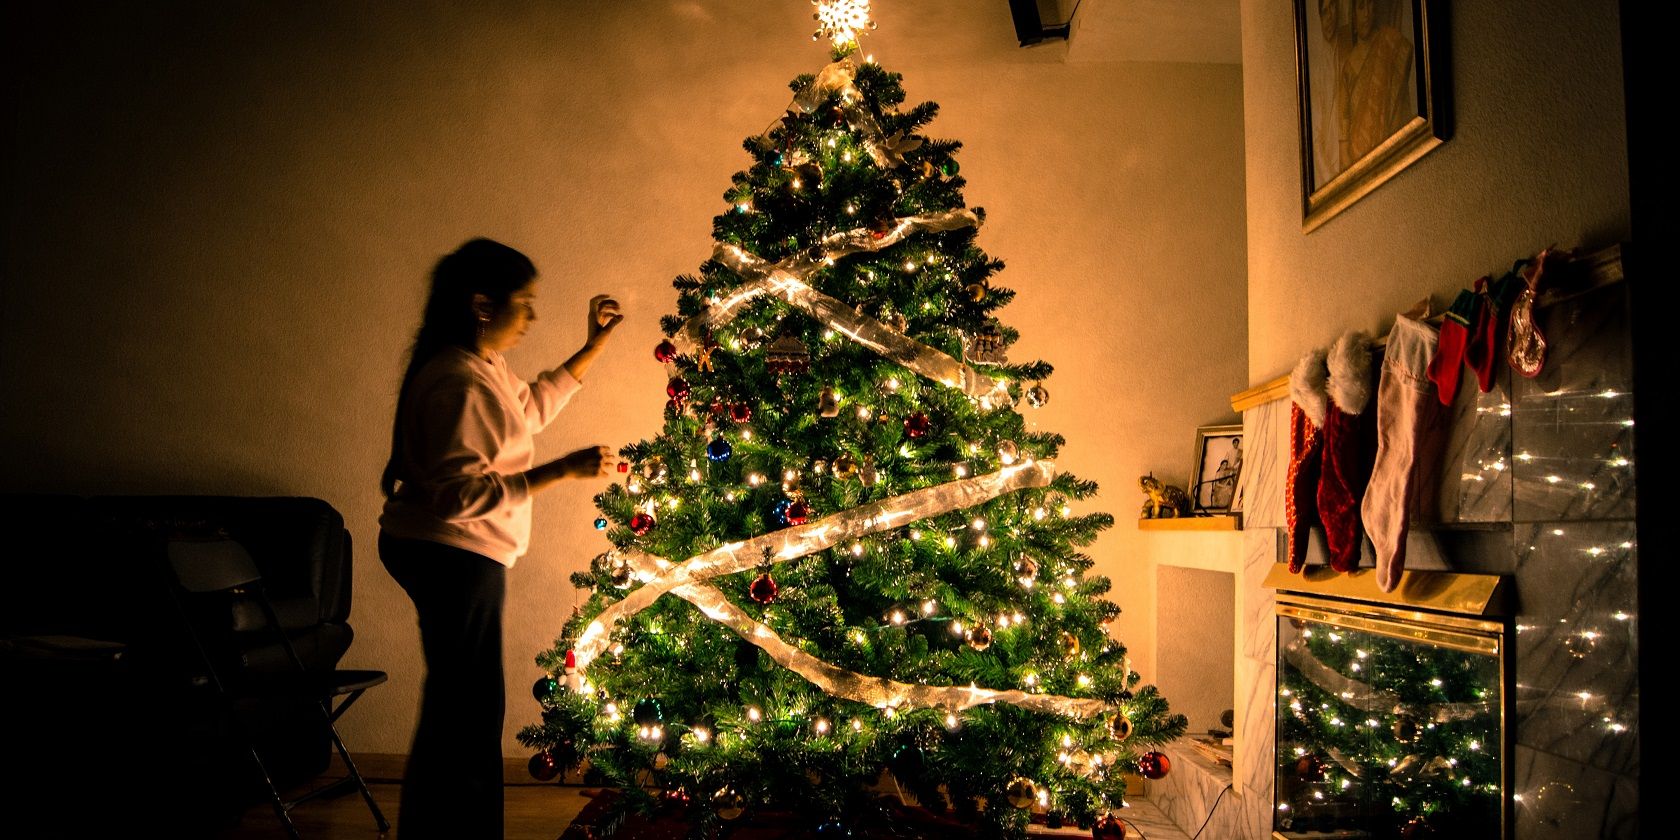 A lady beside a Christmas tree with LED lights